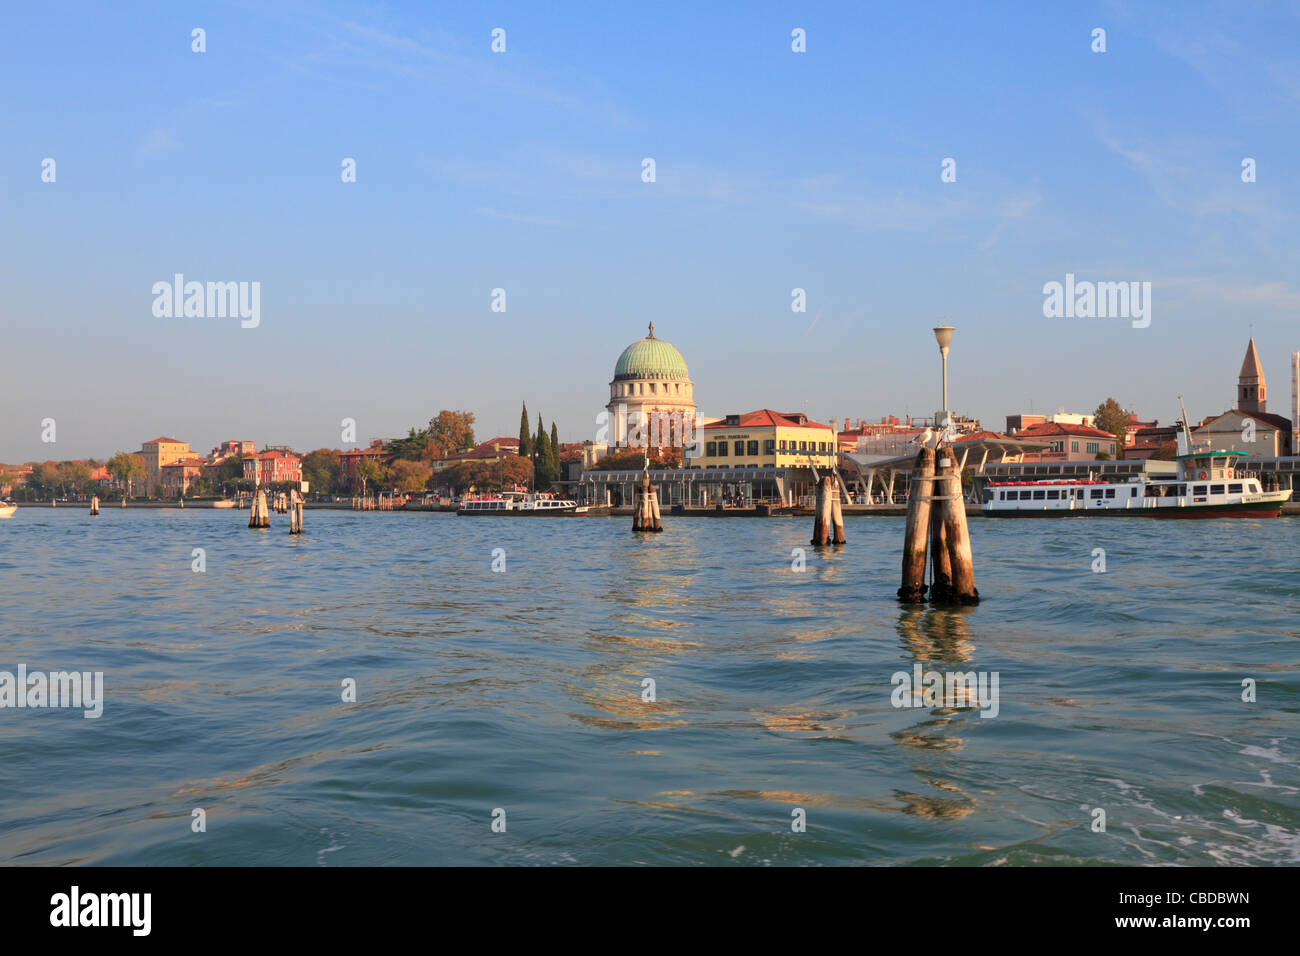 Lido vaporetto Actv boat Station, Panorama Hotel and Santa Maria Elisabetta Church, Venice, Italy, Europe. Stock Photo